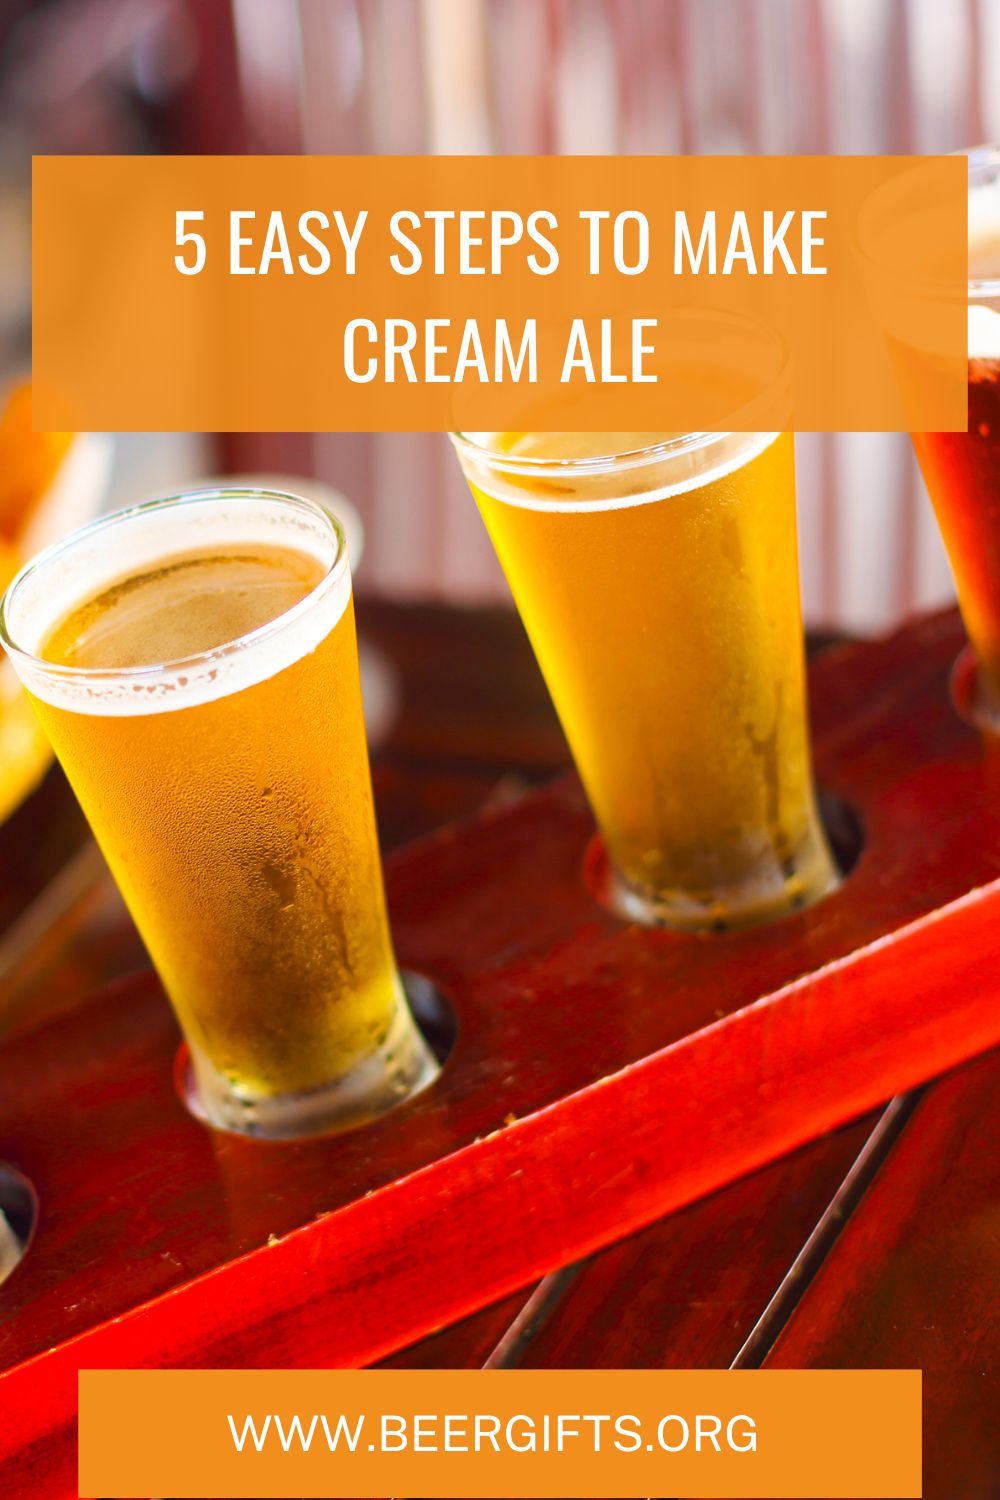 5 Easy Steps to Make Cream Ale6